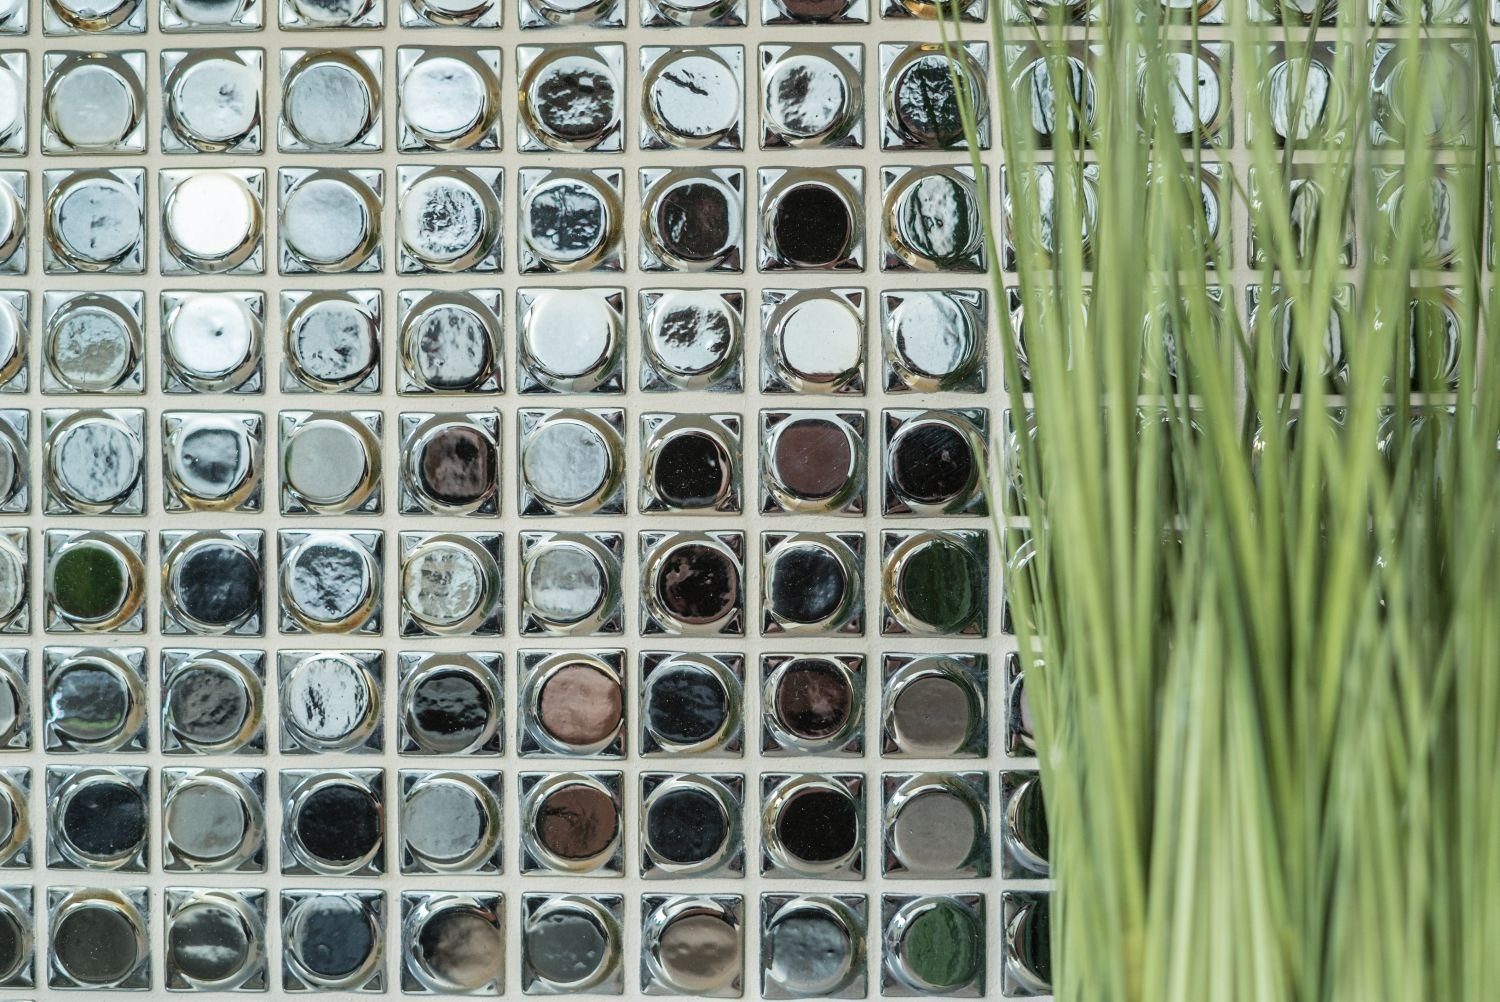 Matten Mosaikfliesen Glasmosaik Recycling Mosani 10 / schwarz Mosaikfliesen glänzend